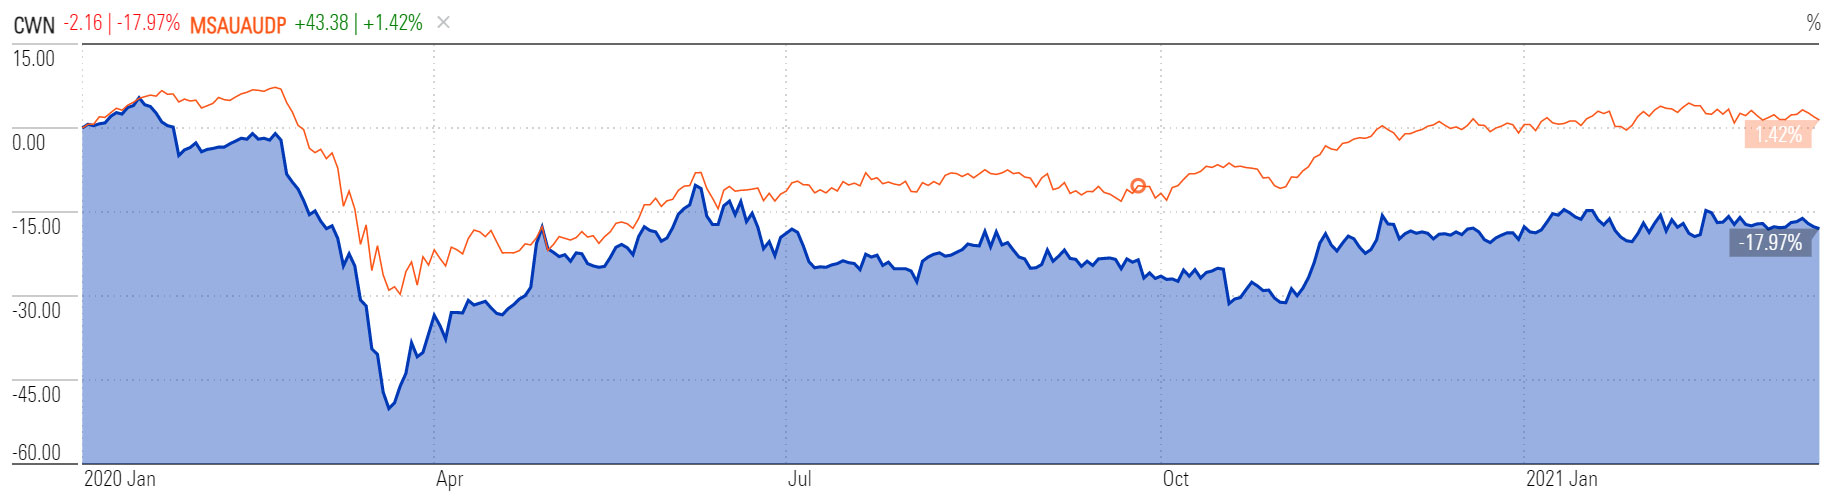 Crown stock price versus Morningstar Australia PR